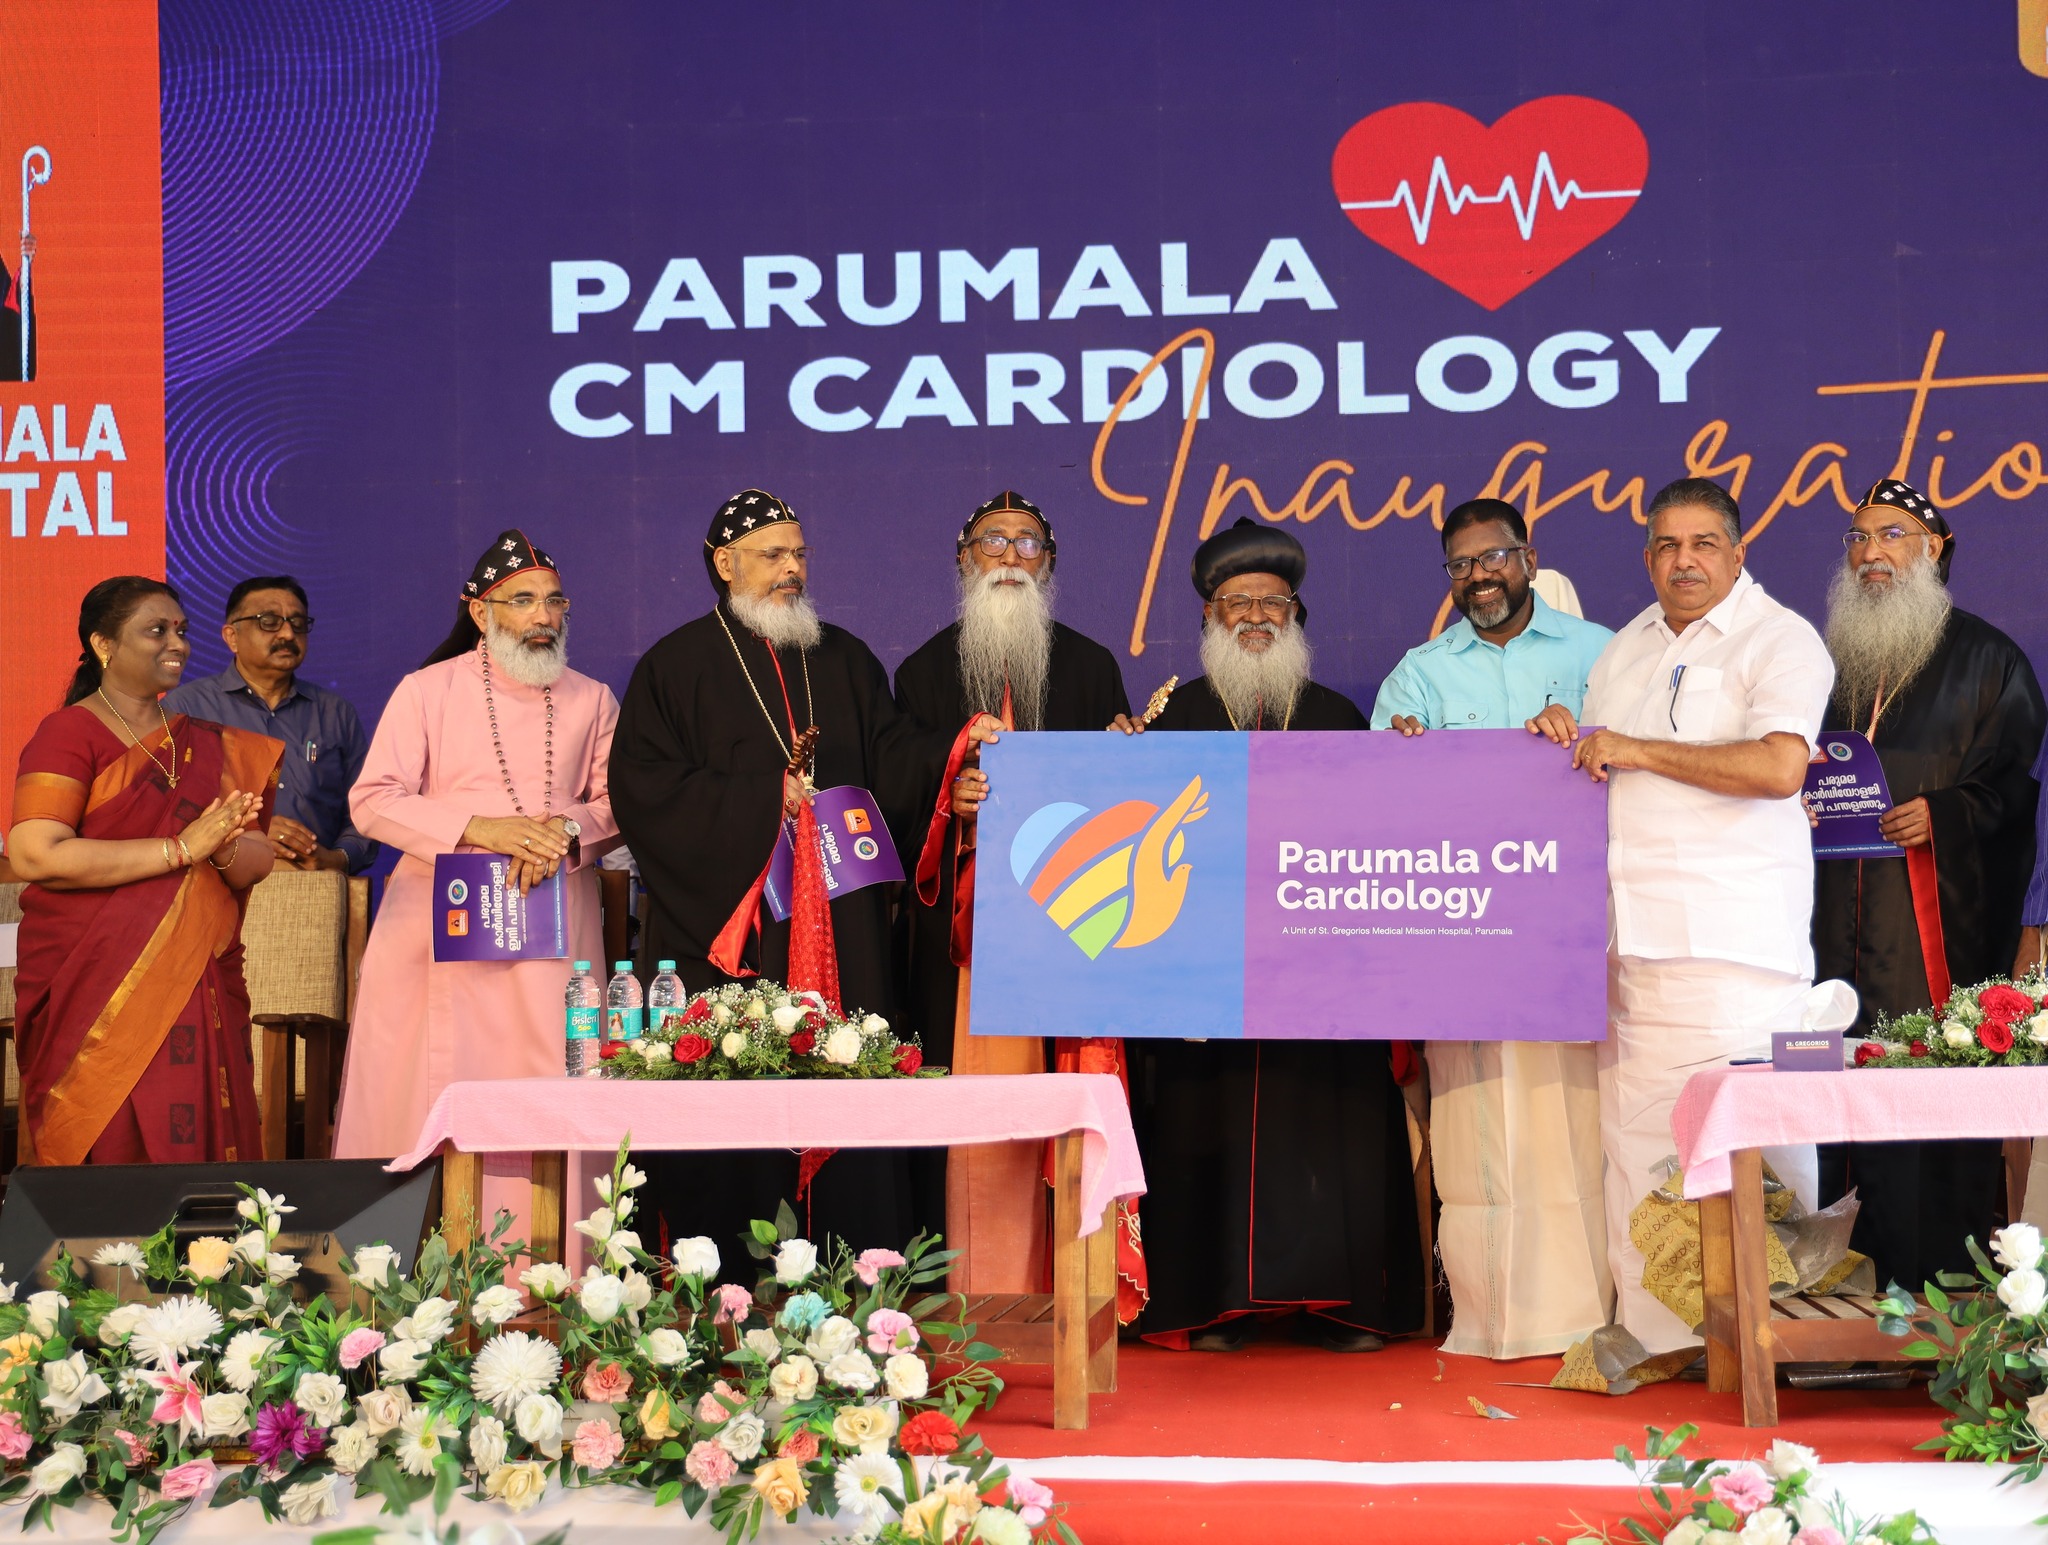 Inauguration of Parumala C M Cardiology